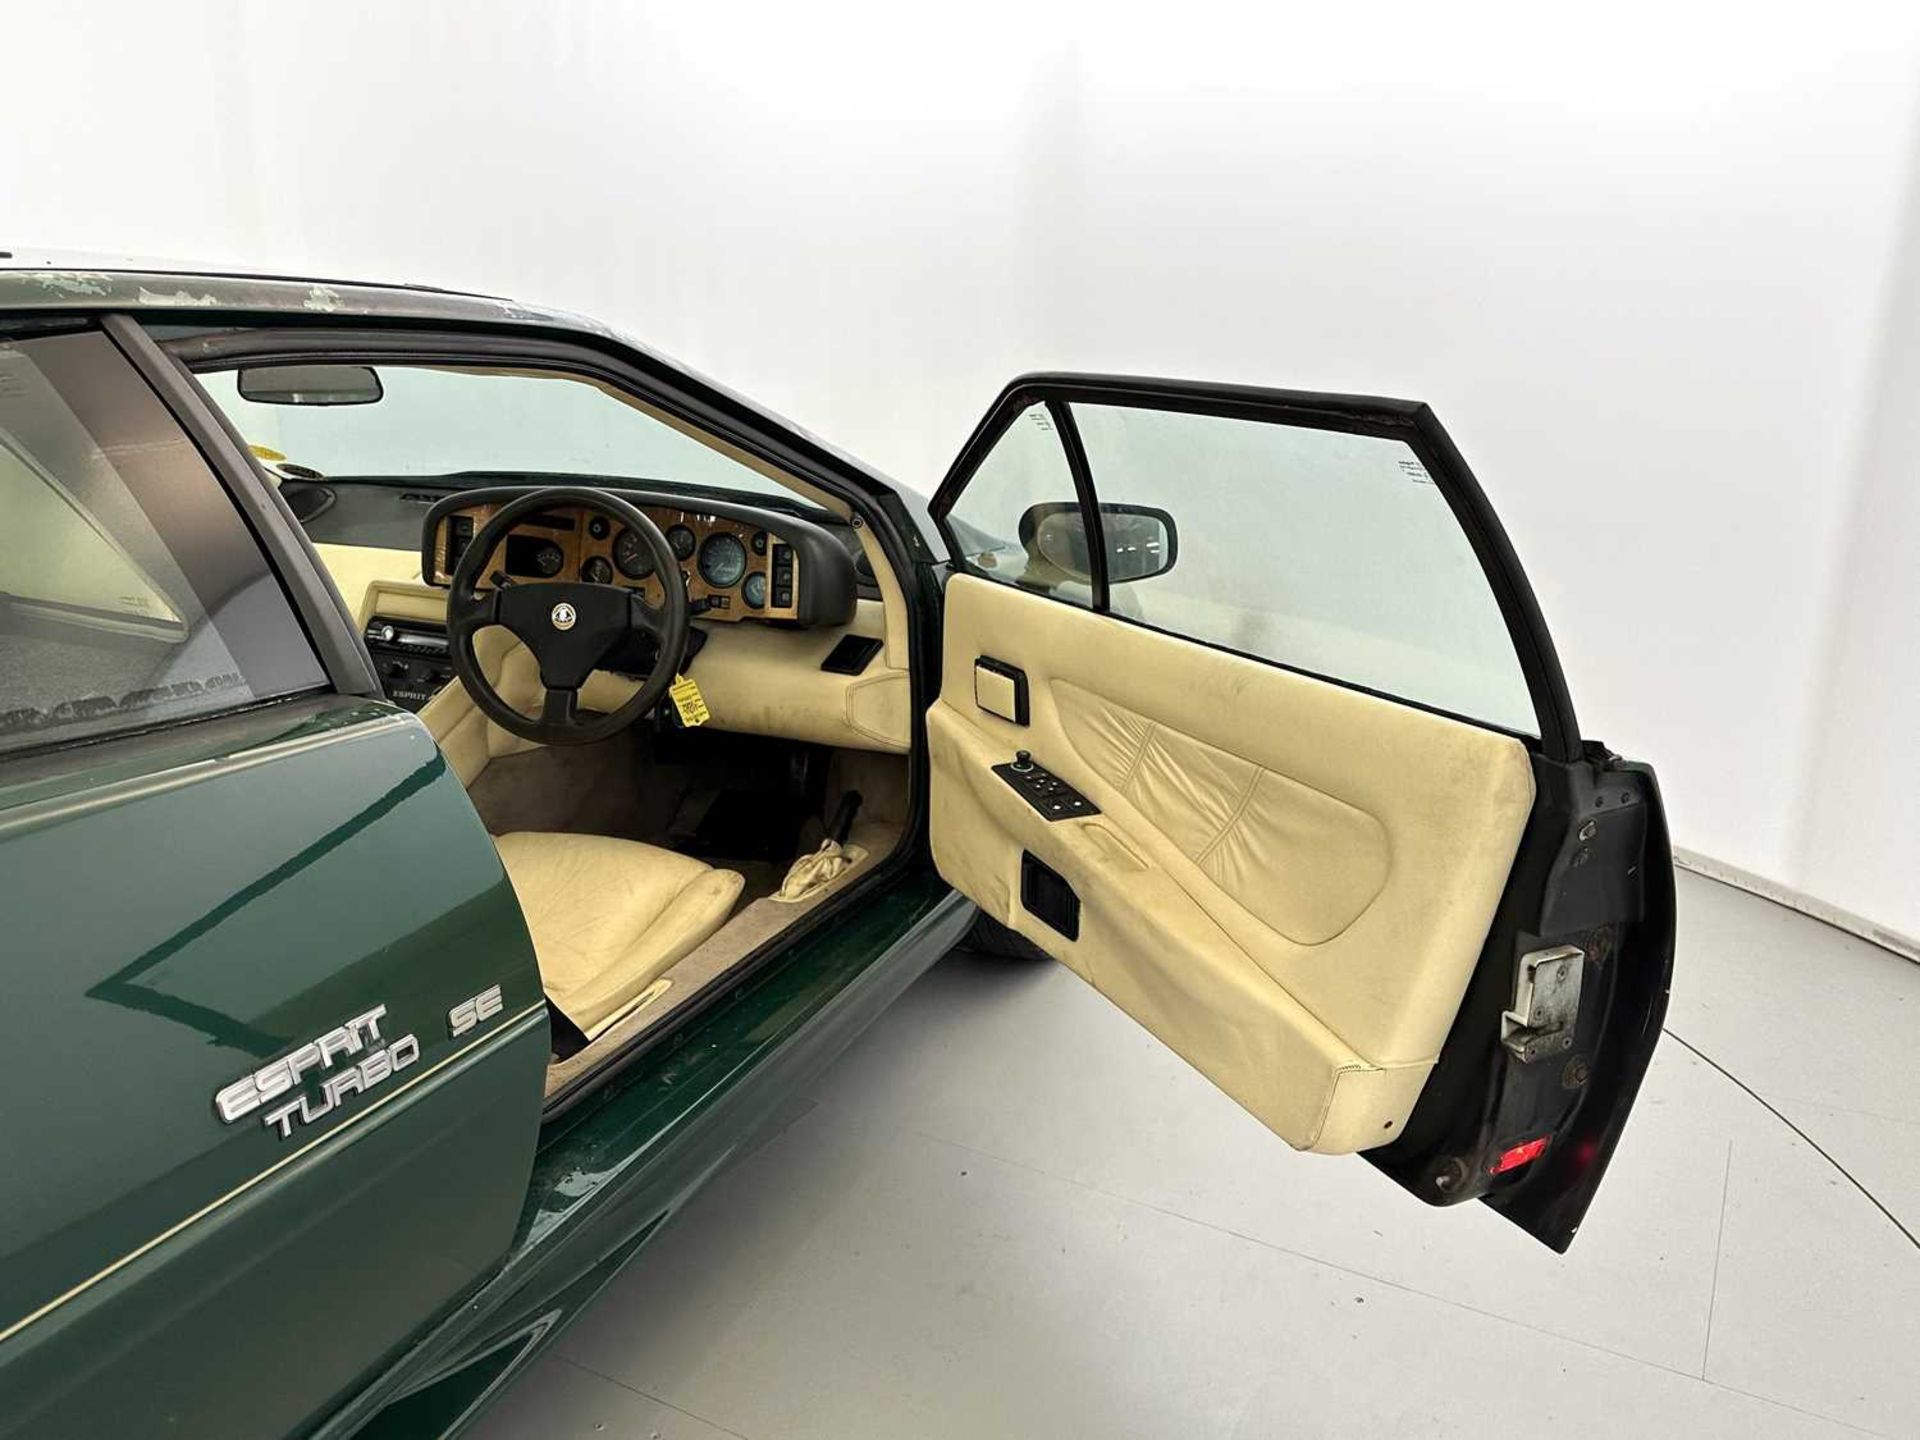 1990 Lotus Esprit Turbo SE - Image 17 of 27